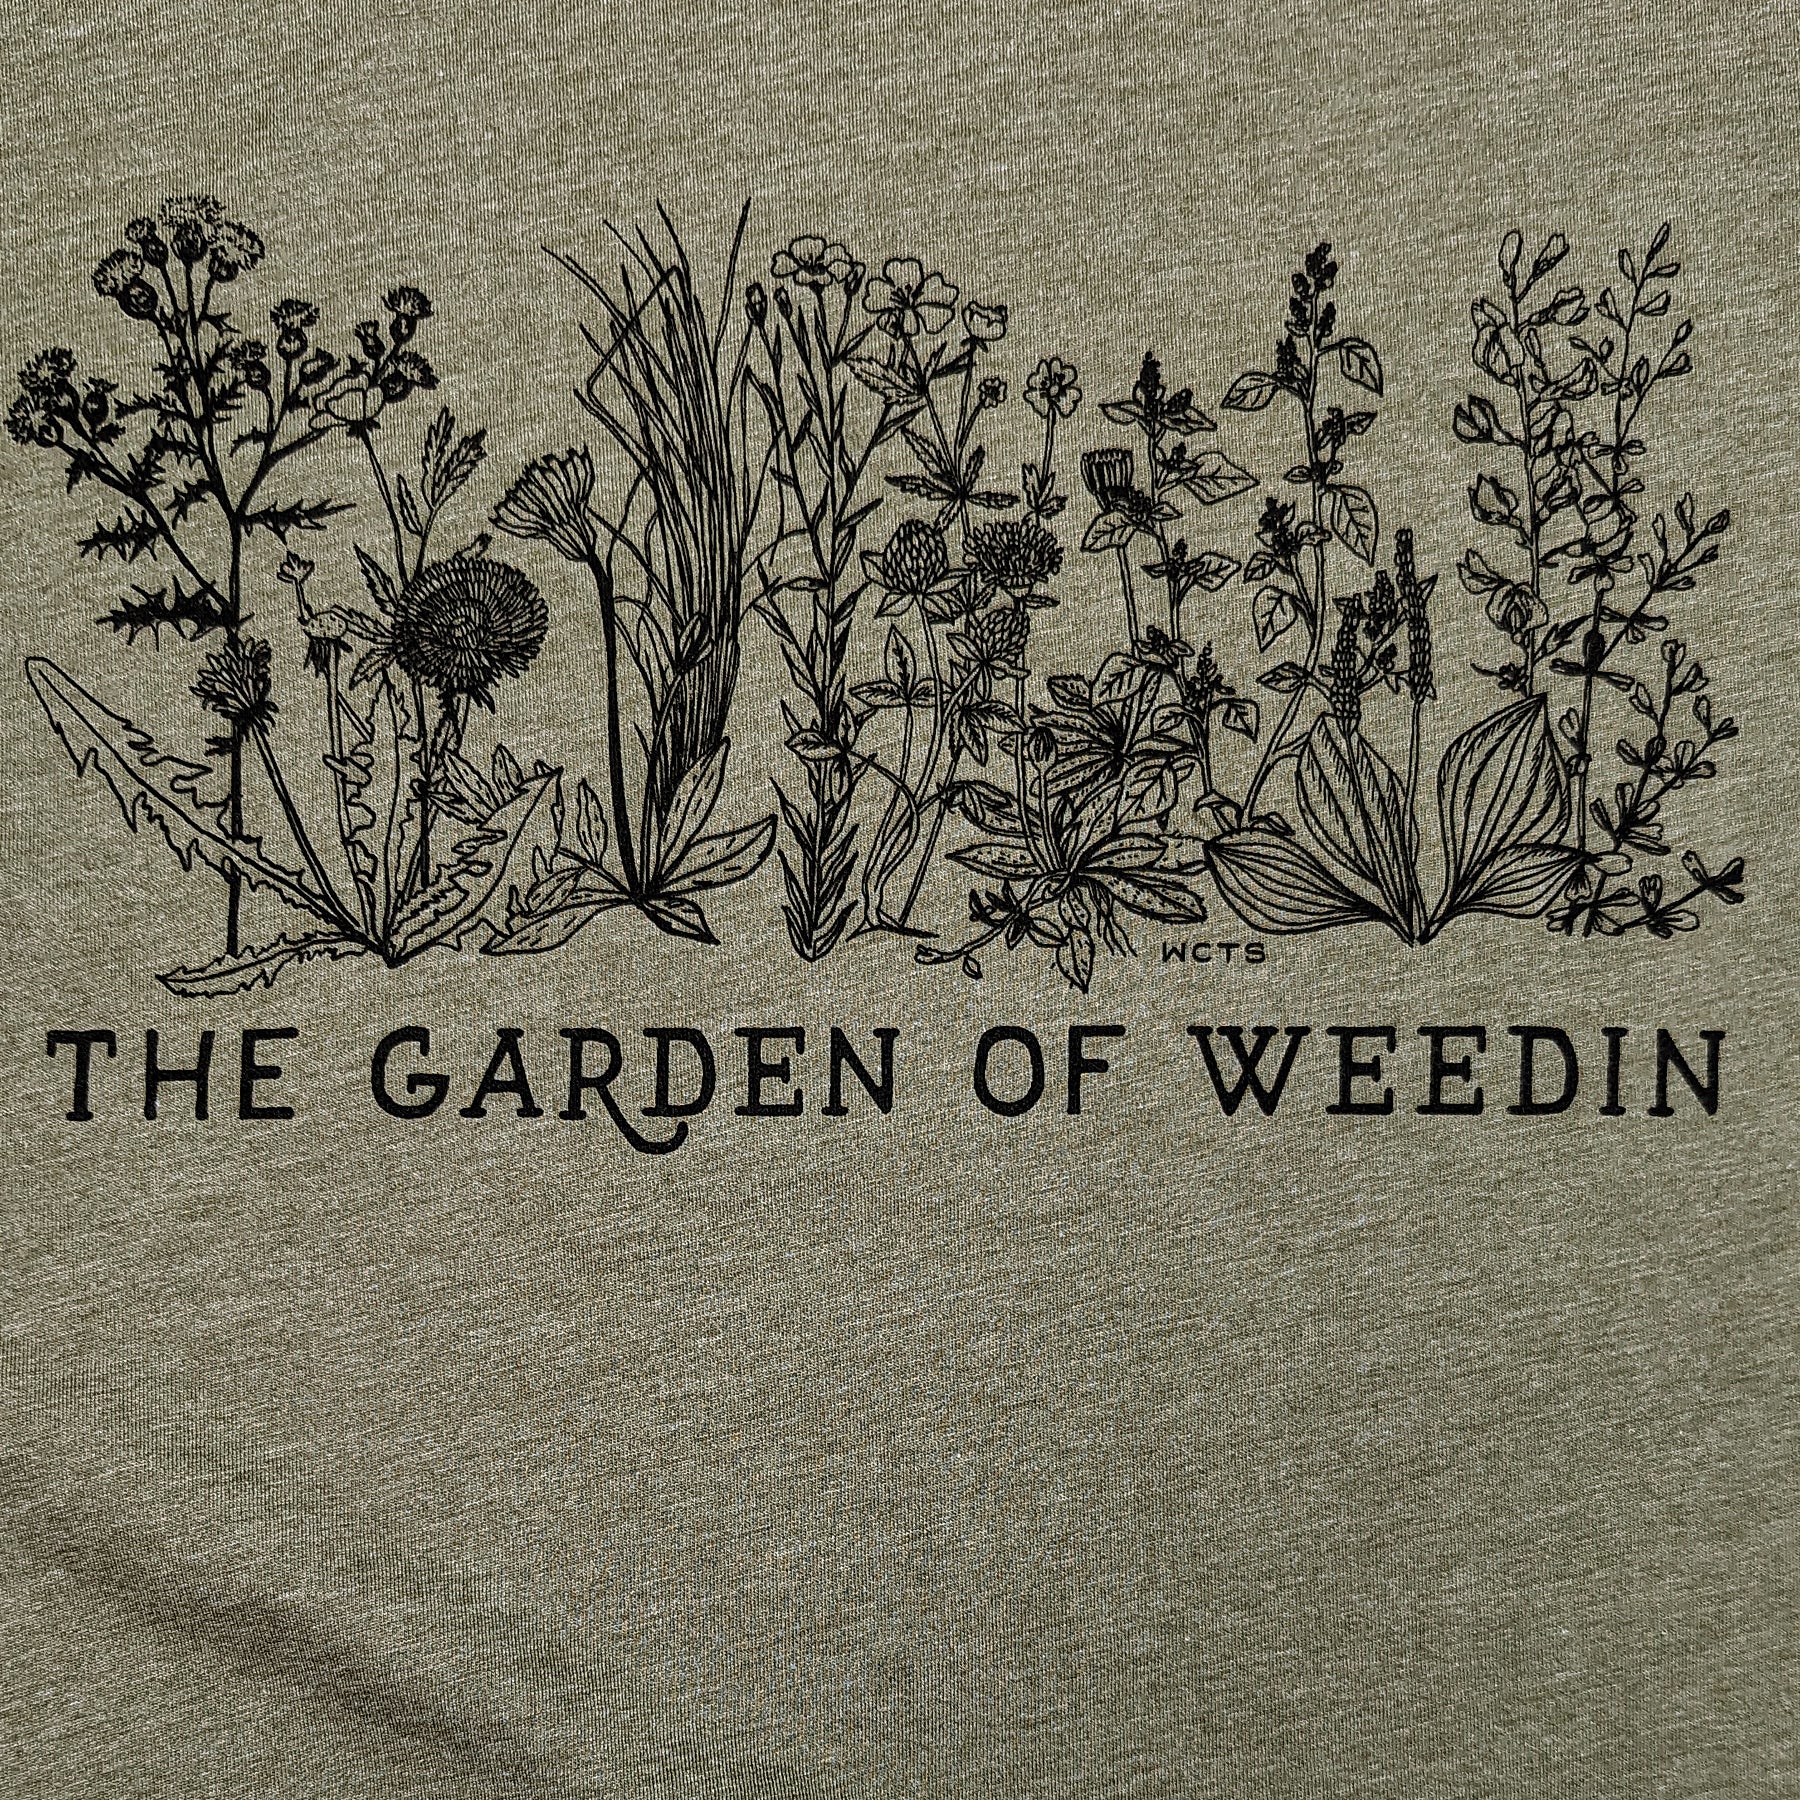 Women's Garden of Weedin Crew Neck T-shirt